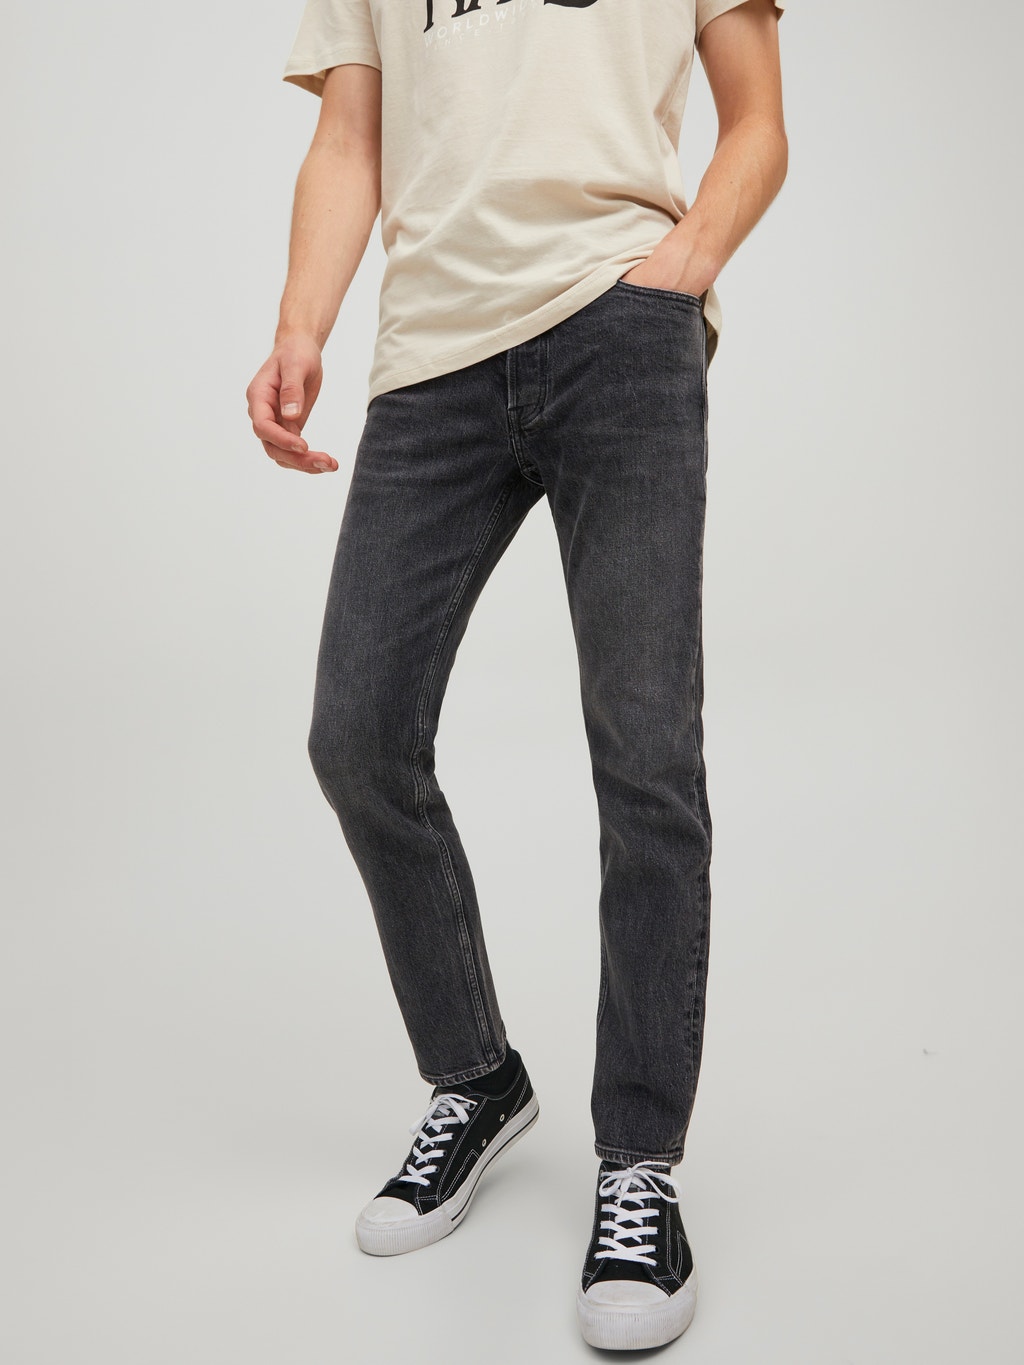 Tim CJ 915 Slim/straight fit jeans with 20% discount! |